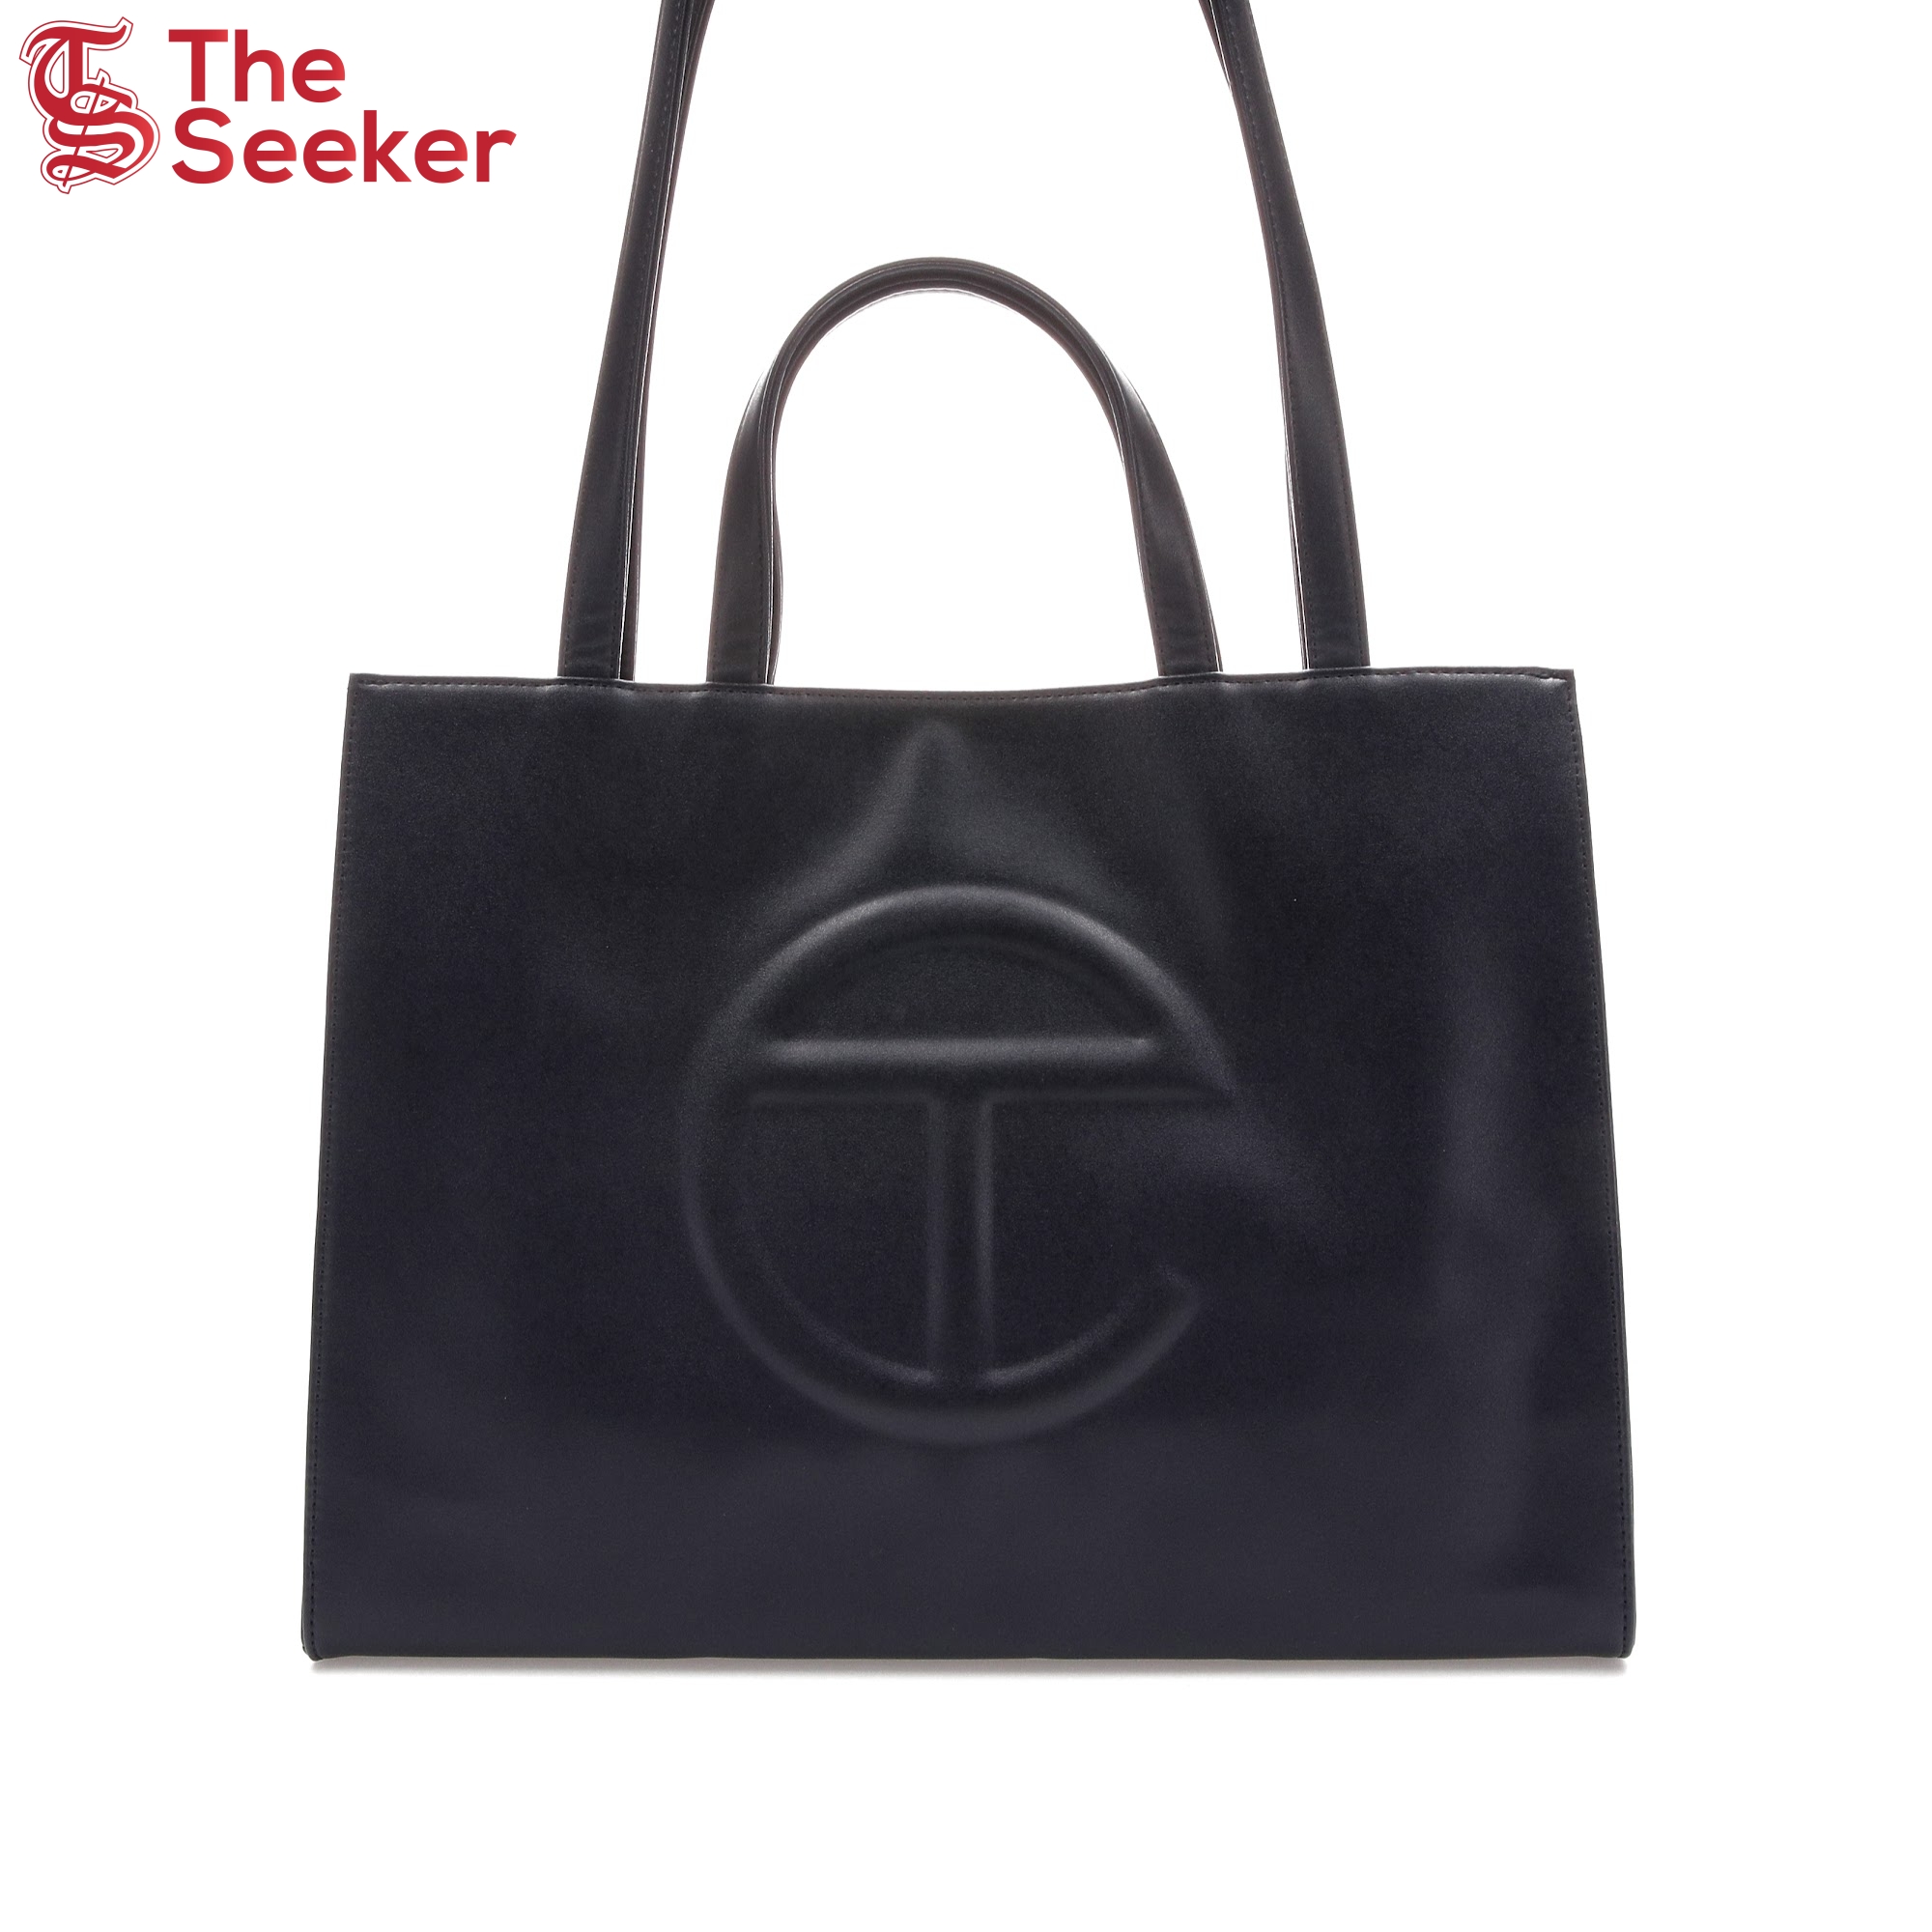 Telfar Shopping Bag Medium Navy